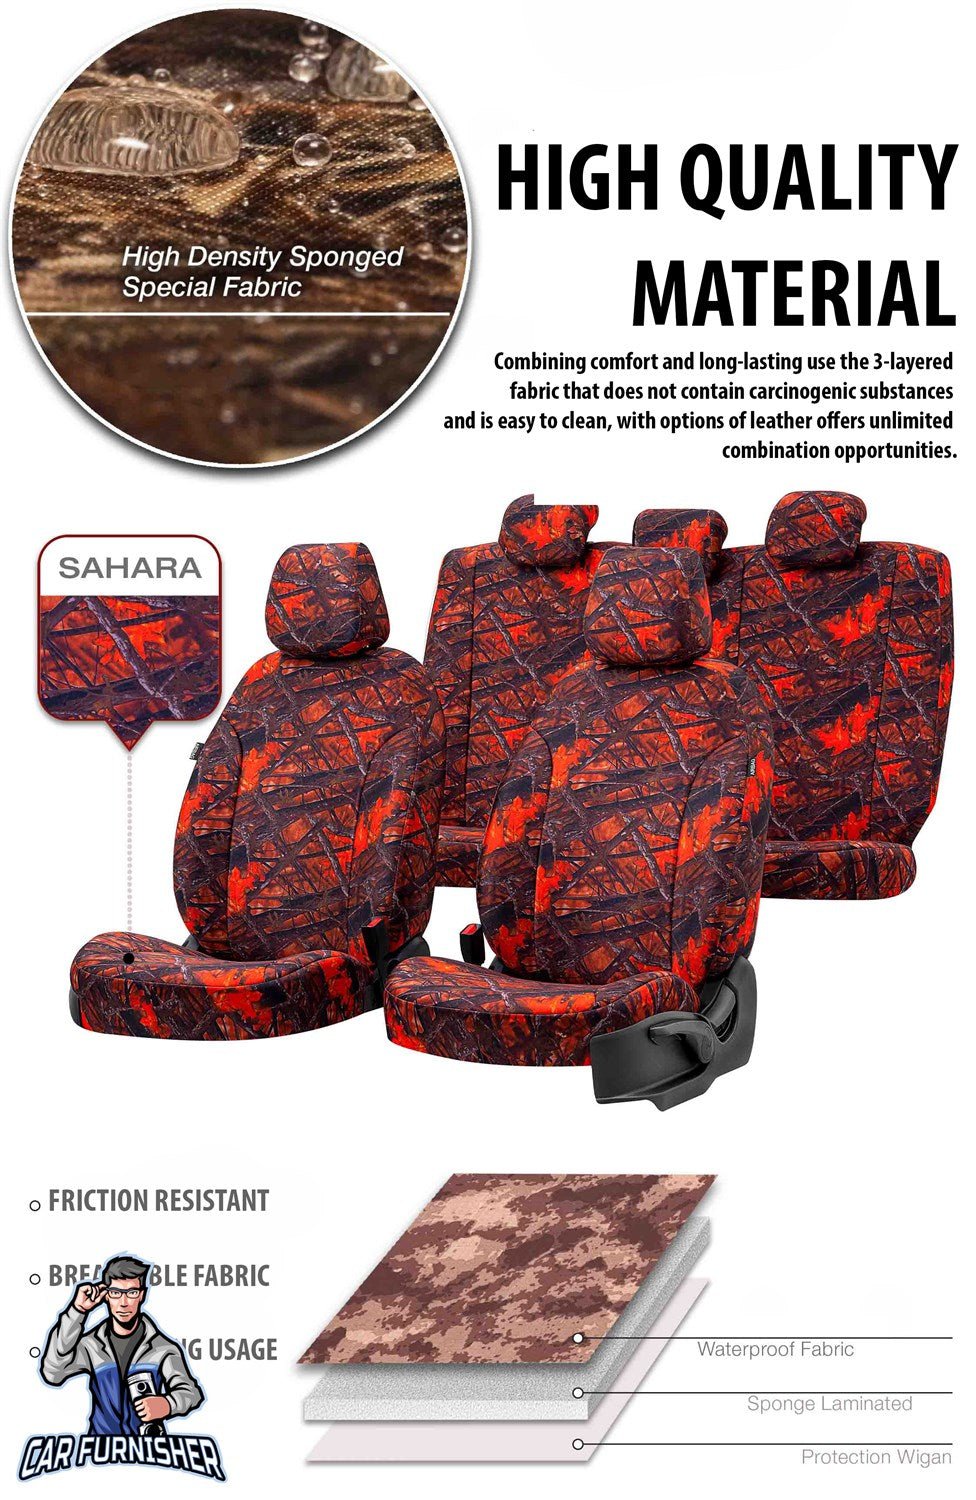 Ssangyong Tivoli Seat Covers Camouflage Waterproof Design Alps Camo Waterproof Fabric